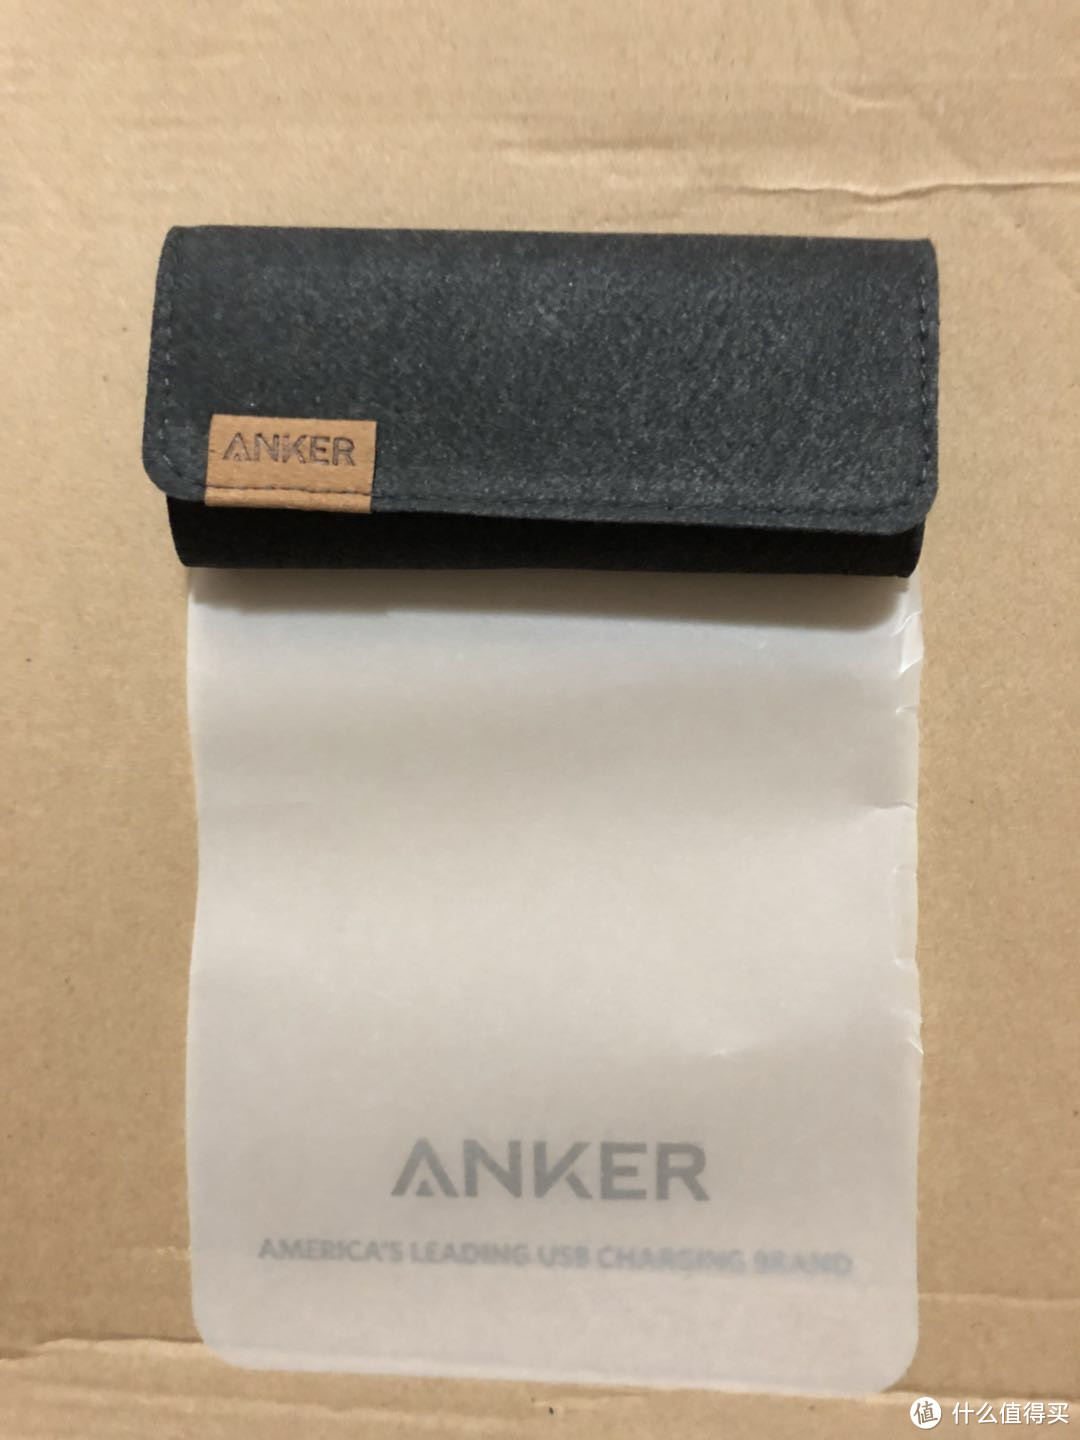 Anker 安克 A8121691 PowerLine+ 苹果数据线测评